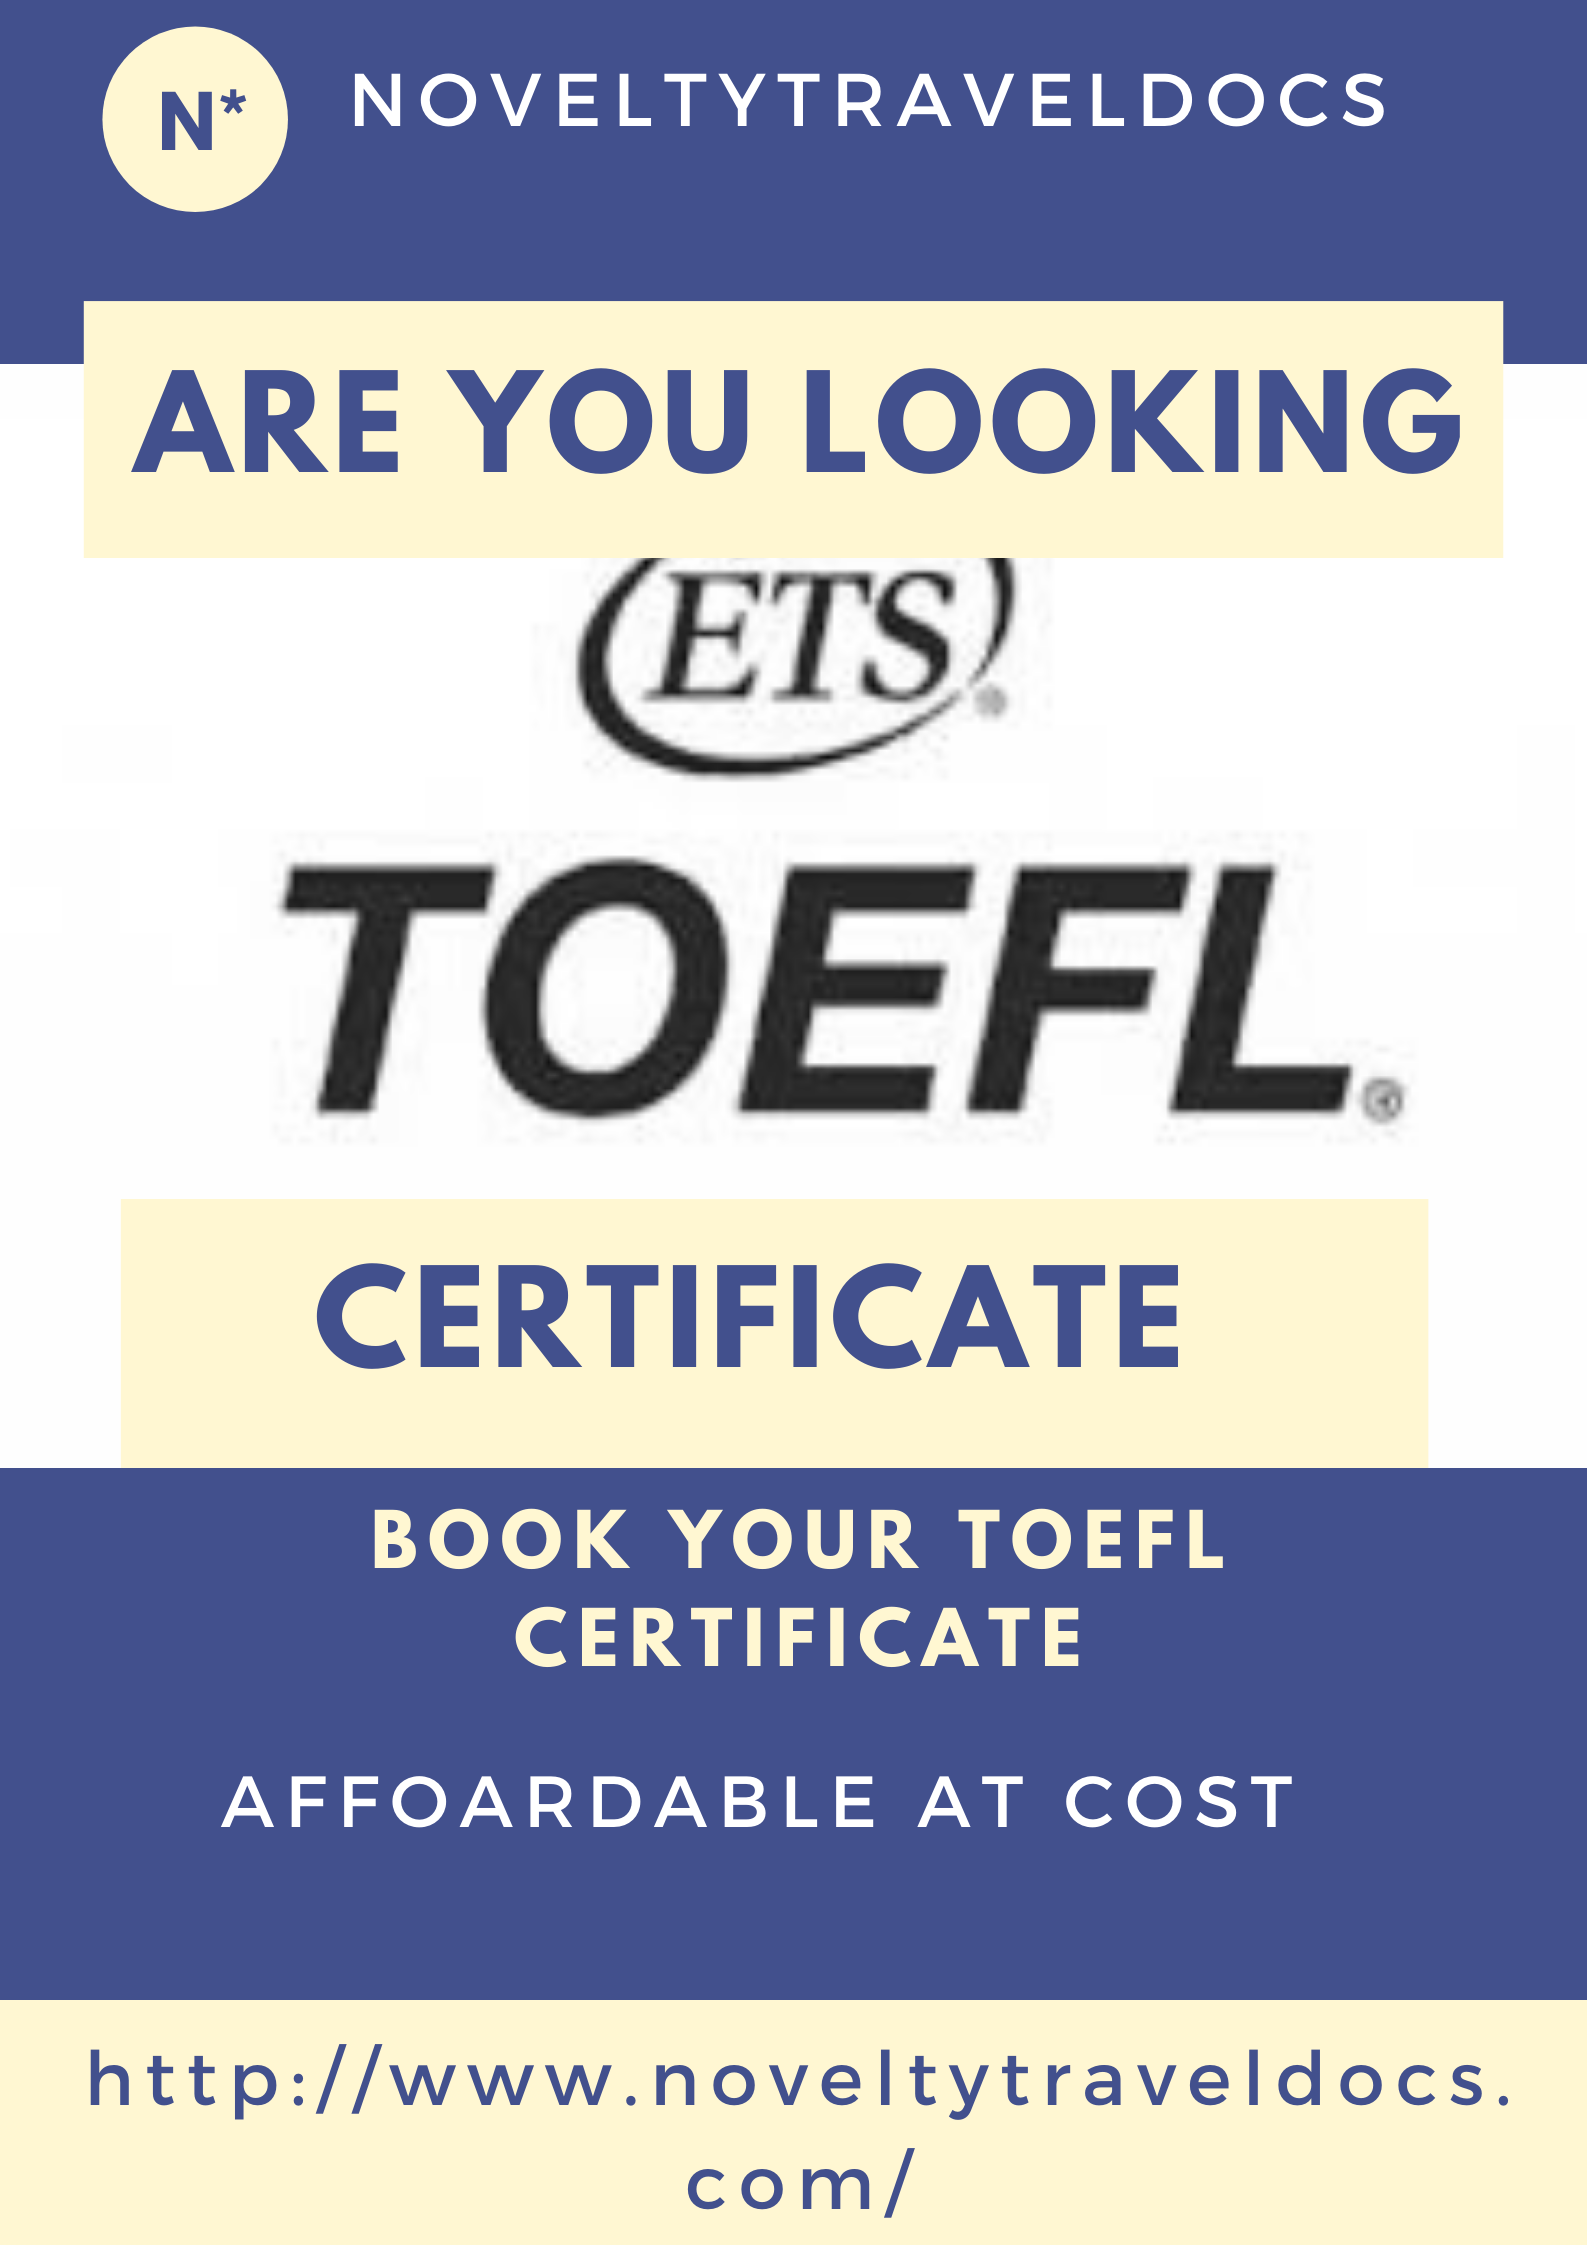 BUY REGISTERED TOEFL Certificate